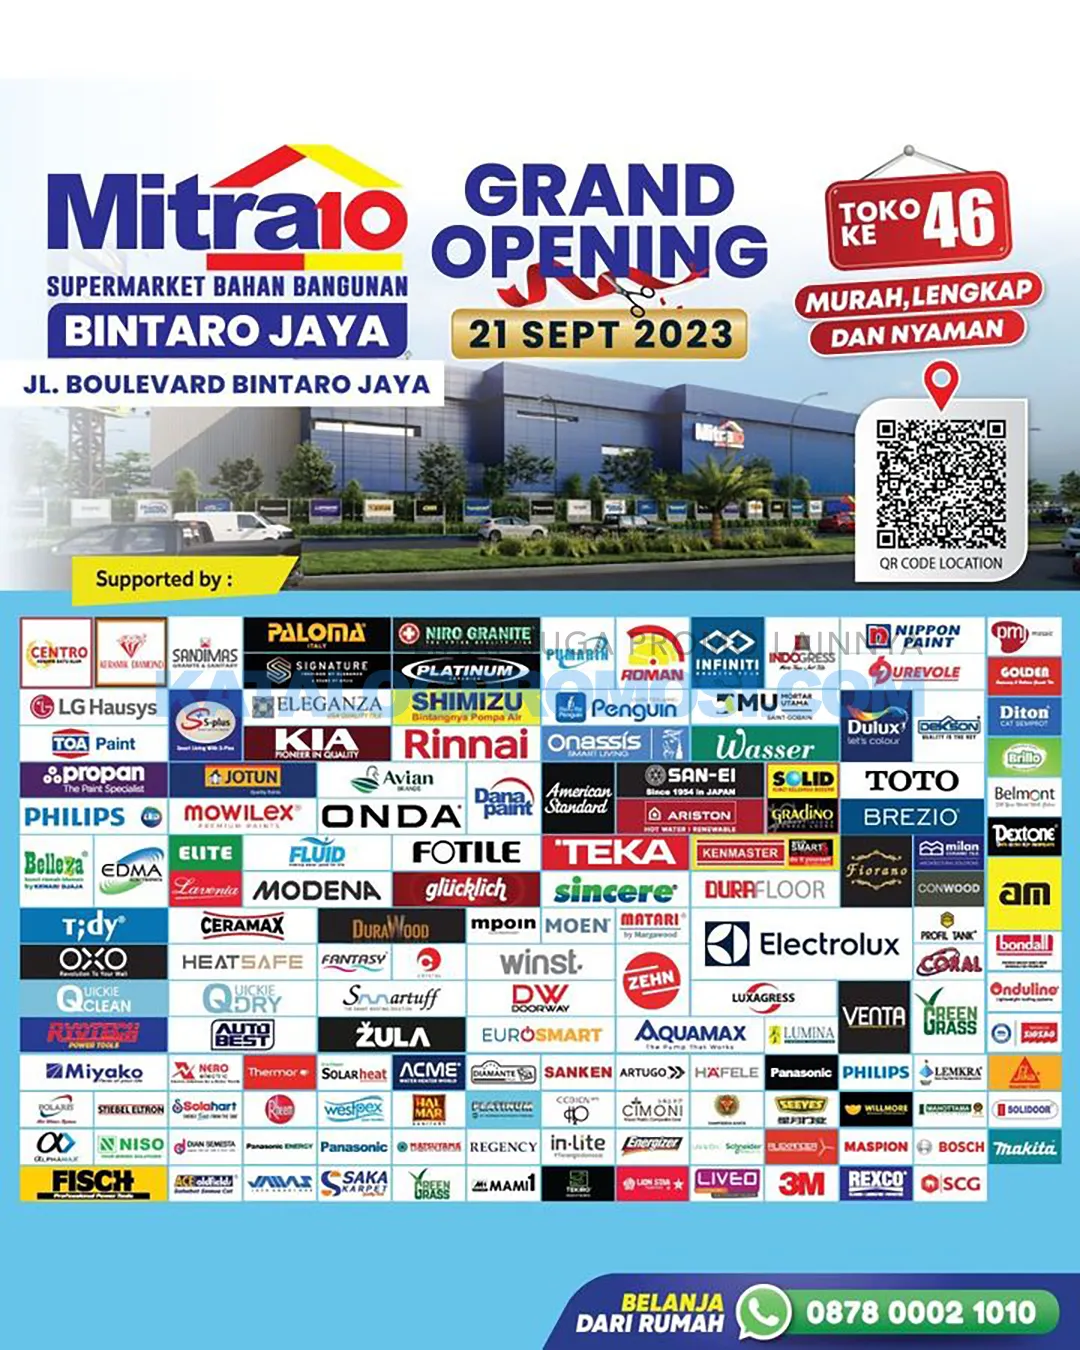 Promo Grand Opening Mitra10 Bintaro Jaya